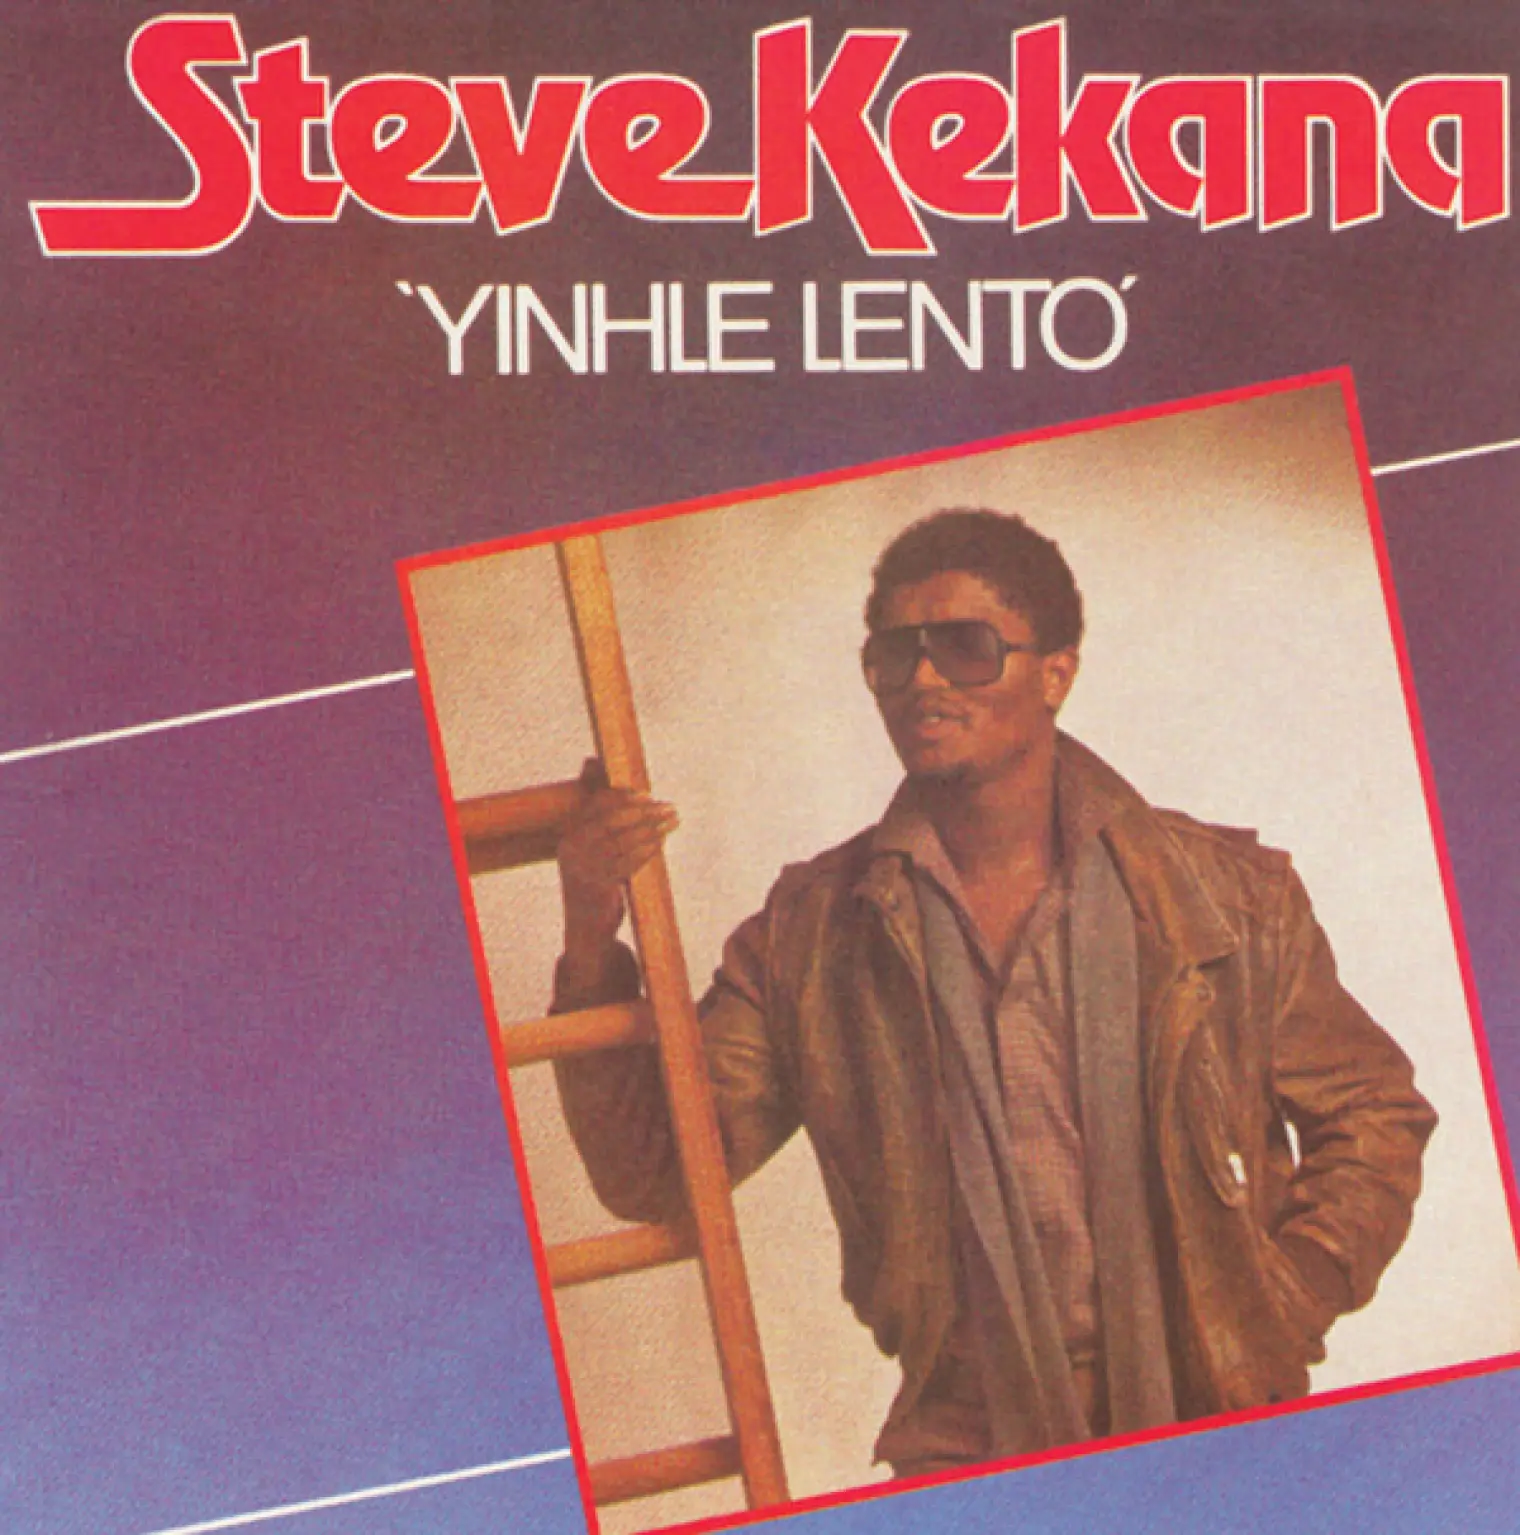 Yinhle Lento -  Steve Kekana 